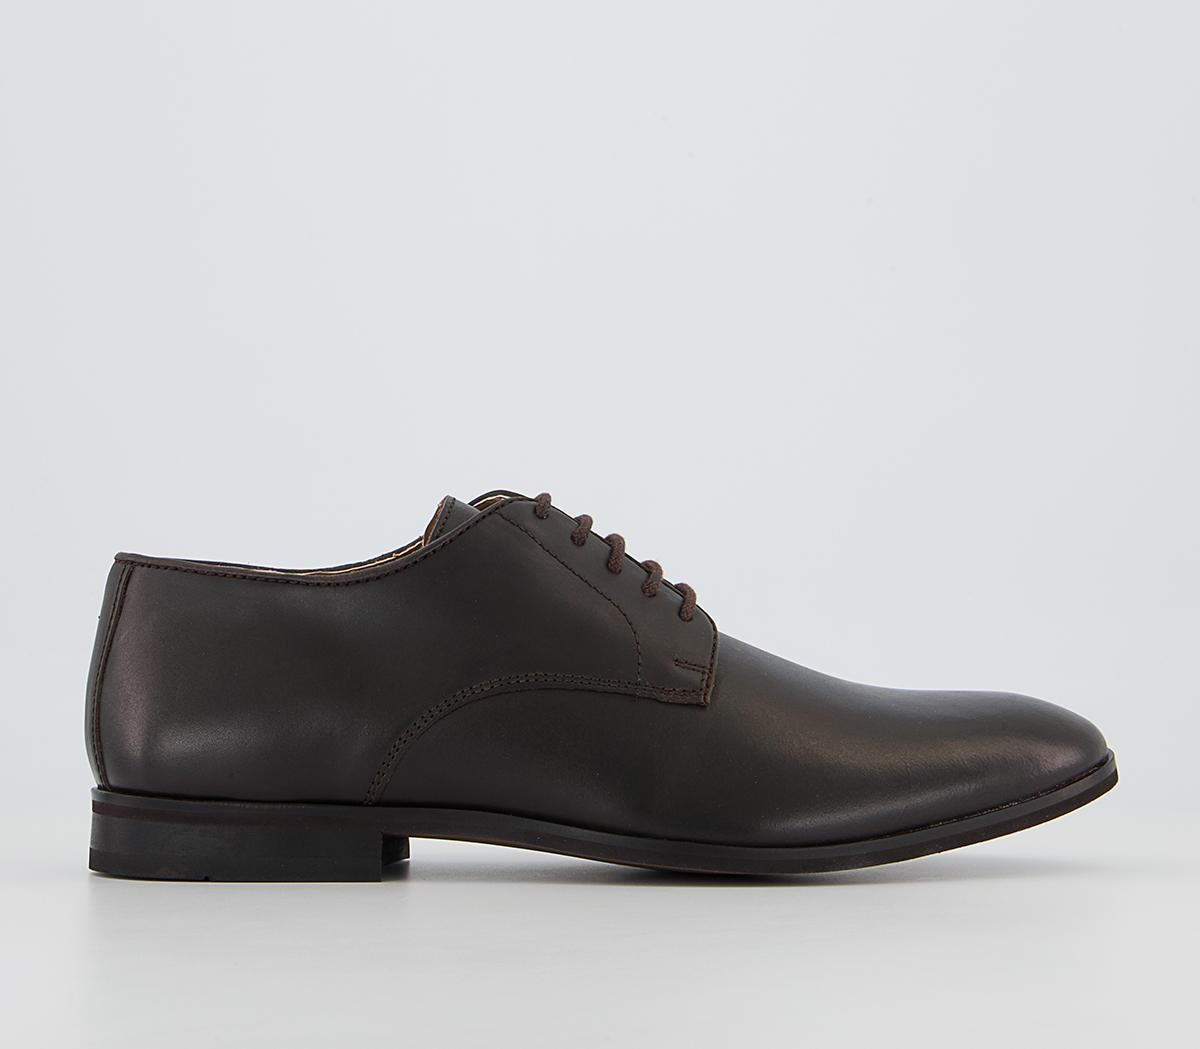 Hudson LondonCraigavon Derby ShoesBrown Leather